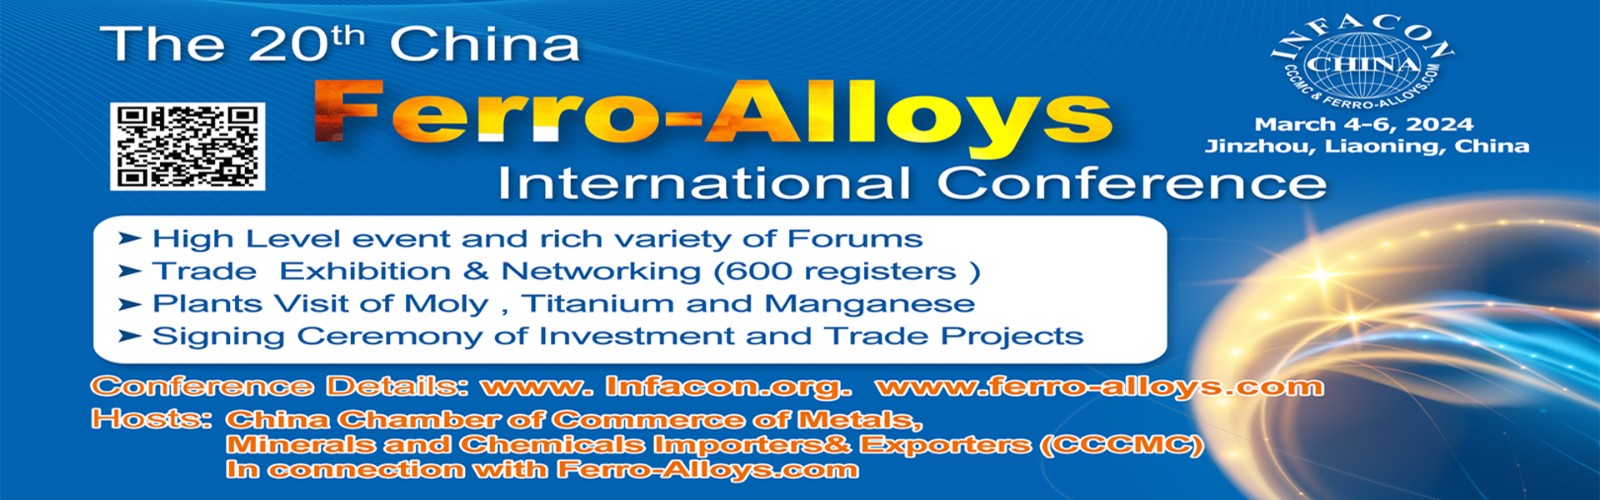 The 20th China Ferro-alloys International Conference.jpg